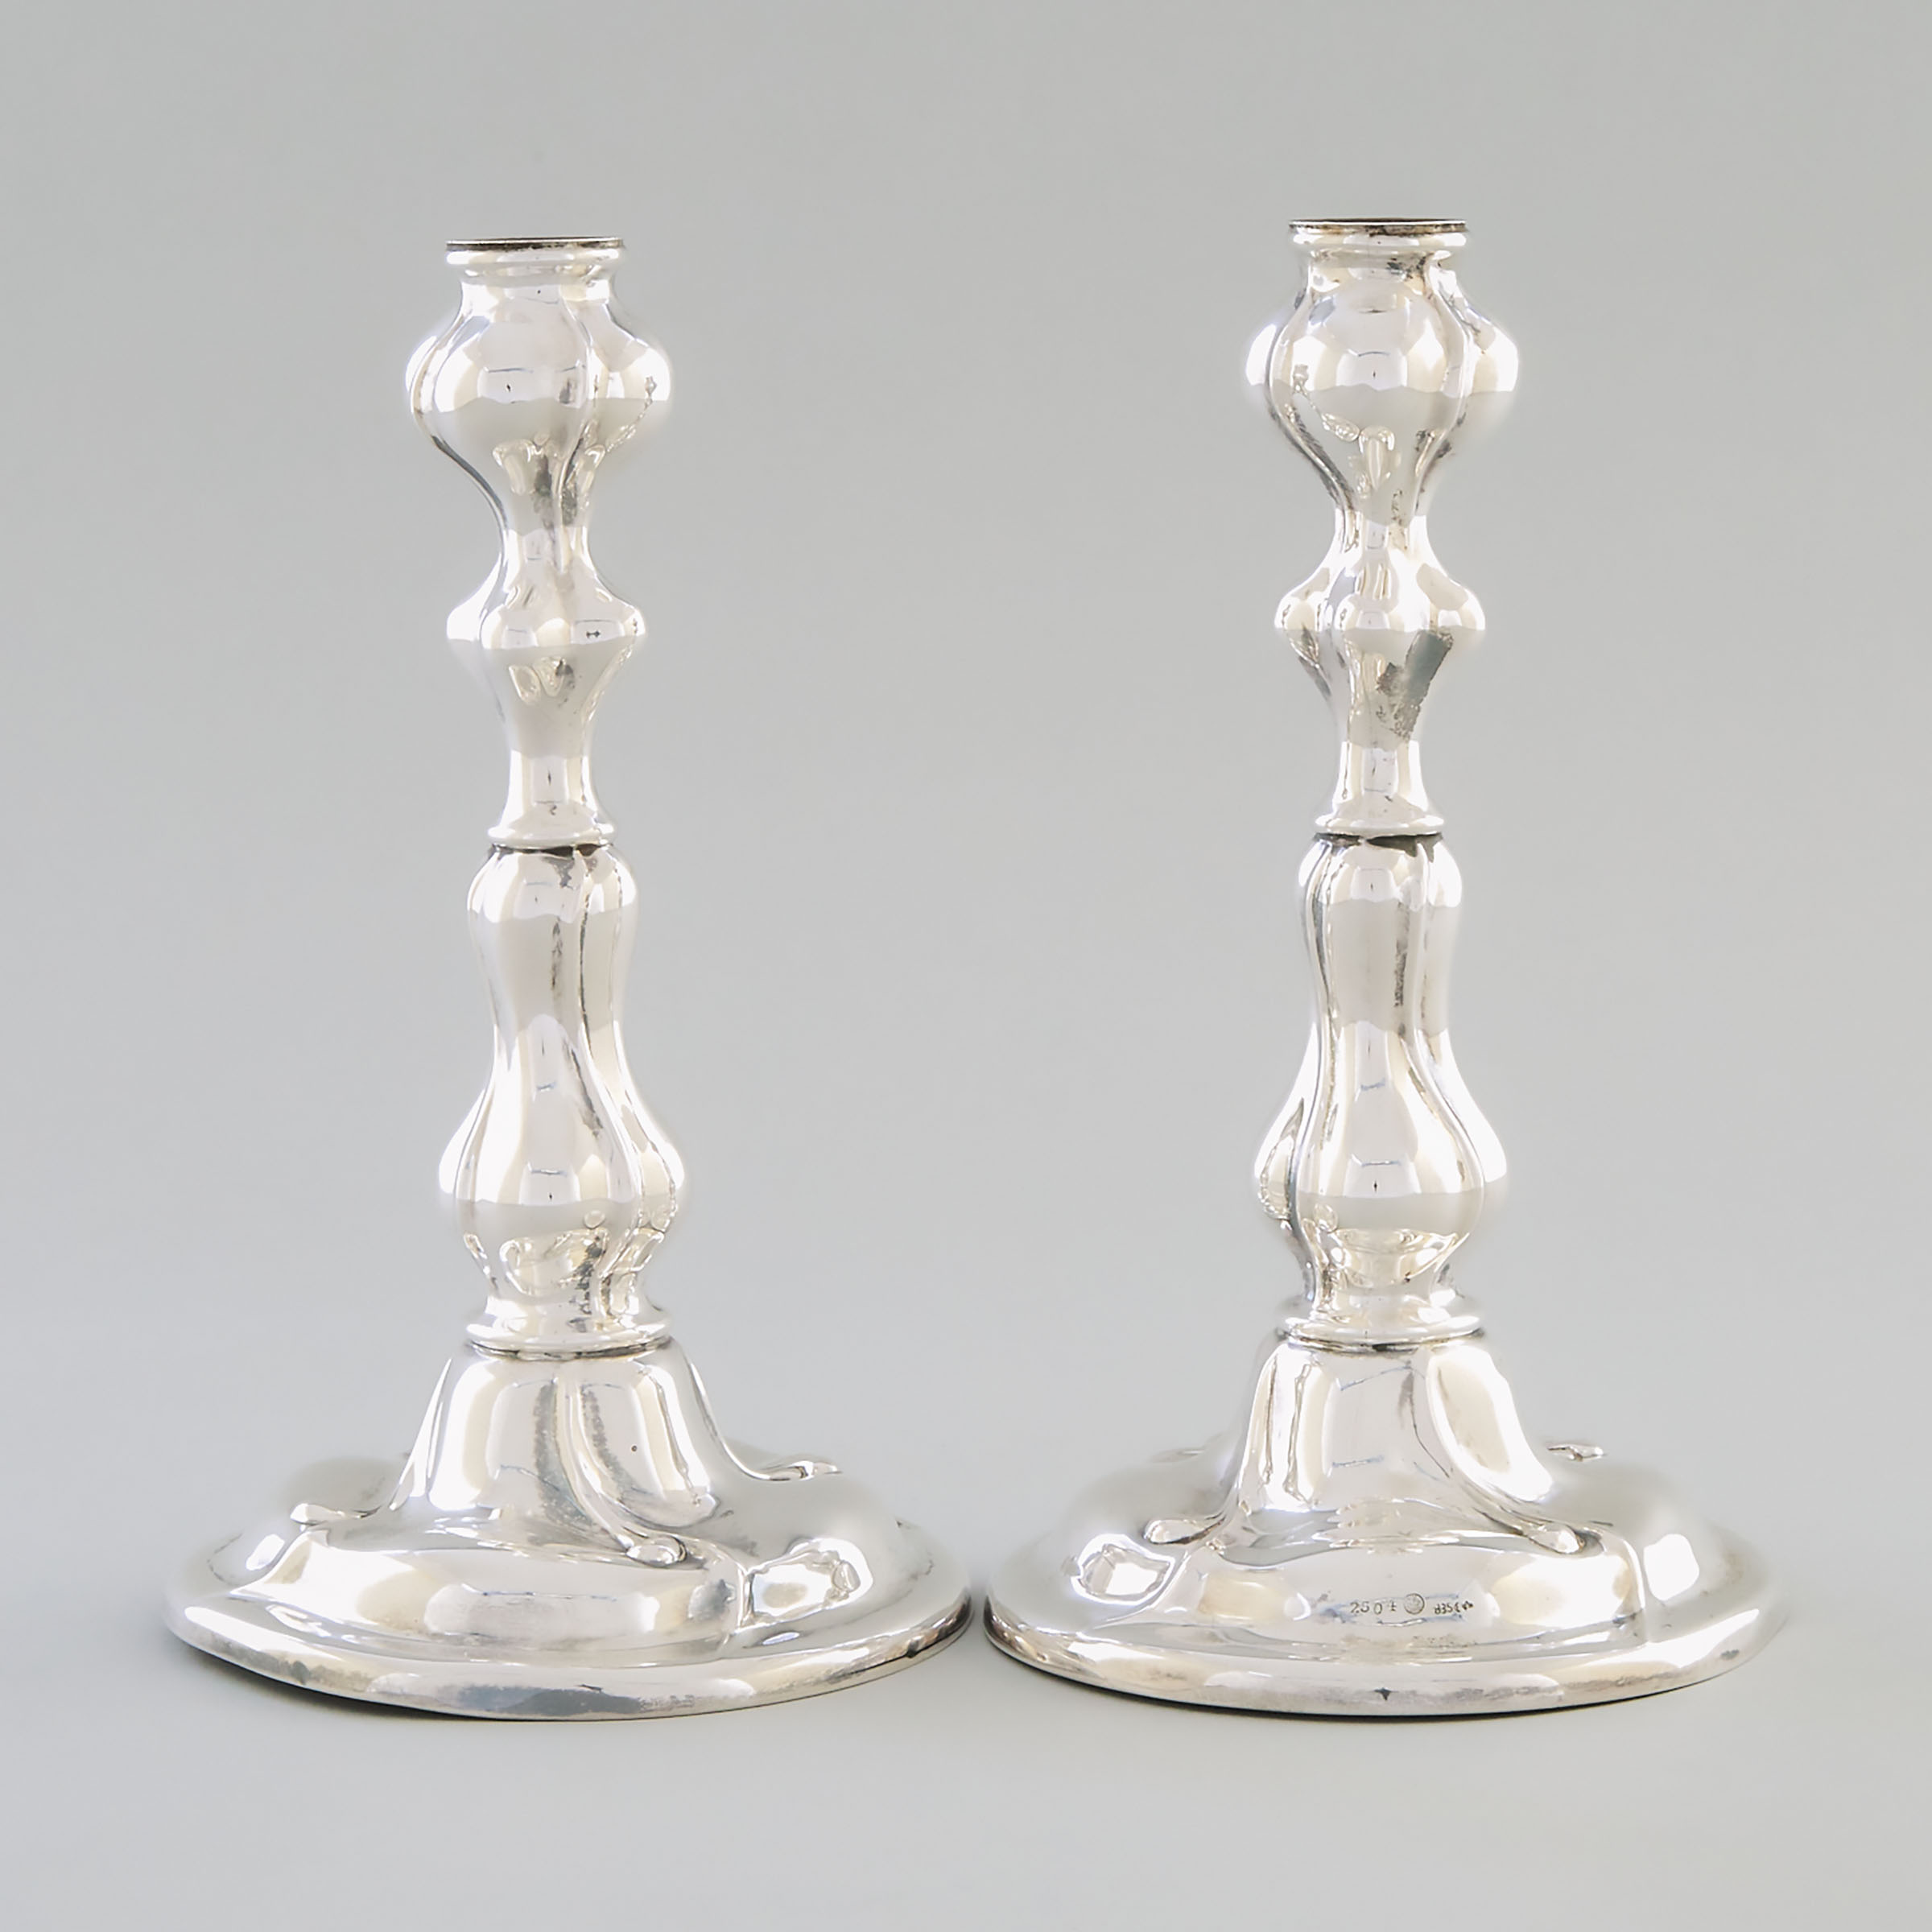 Pair of German Silver Table Candlesticks, Läger & Co., Hanau, early 20th century